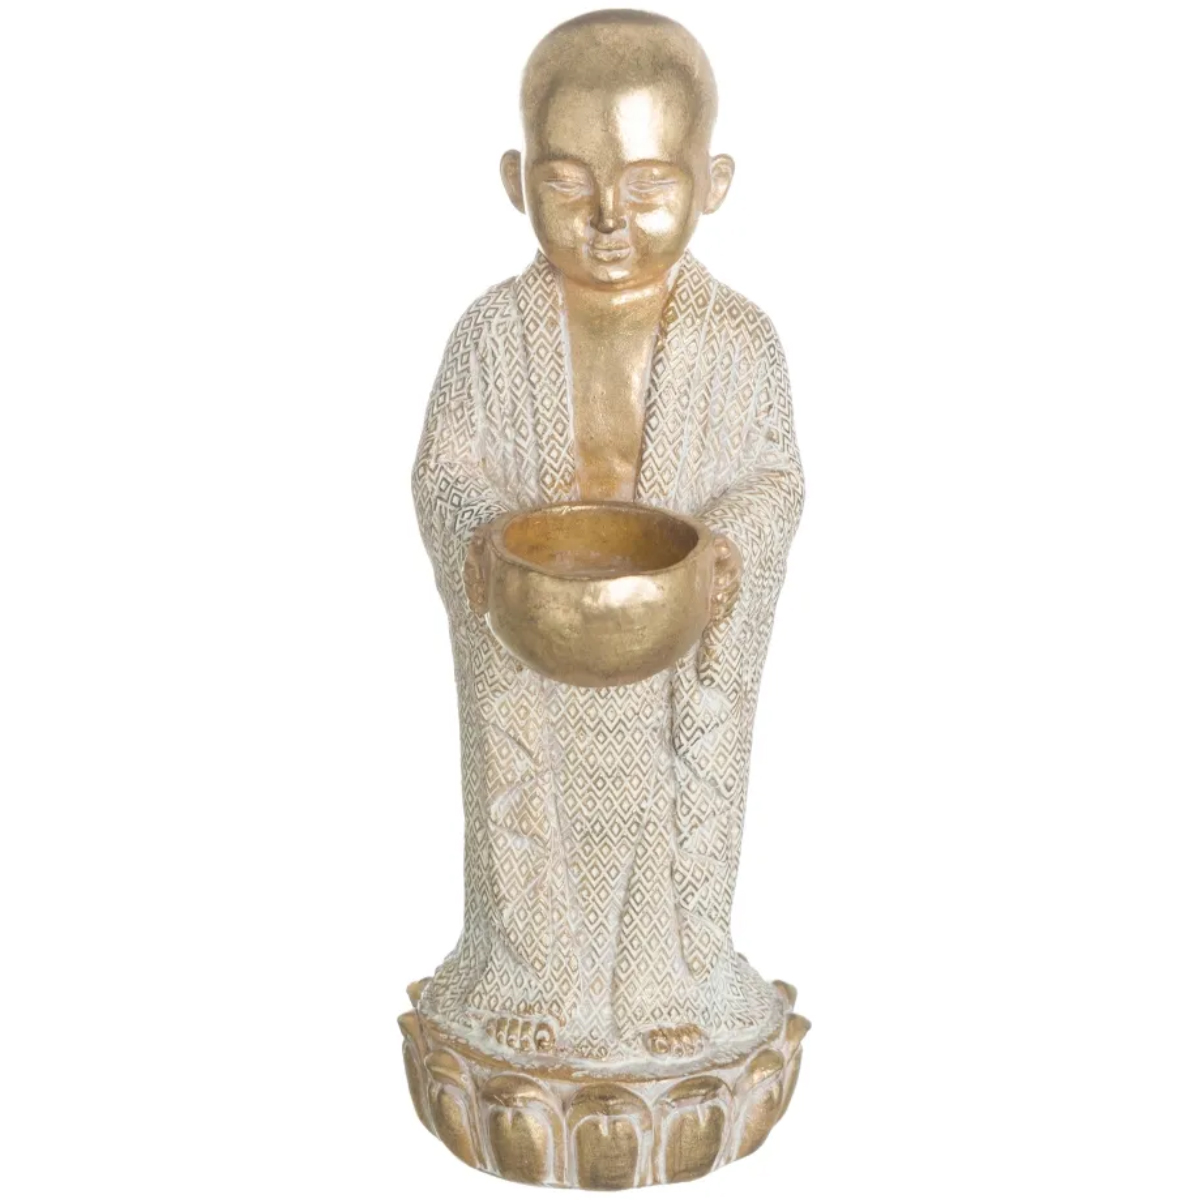 Figurine petit moine bouddhiste 25 cm